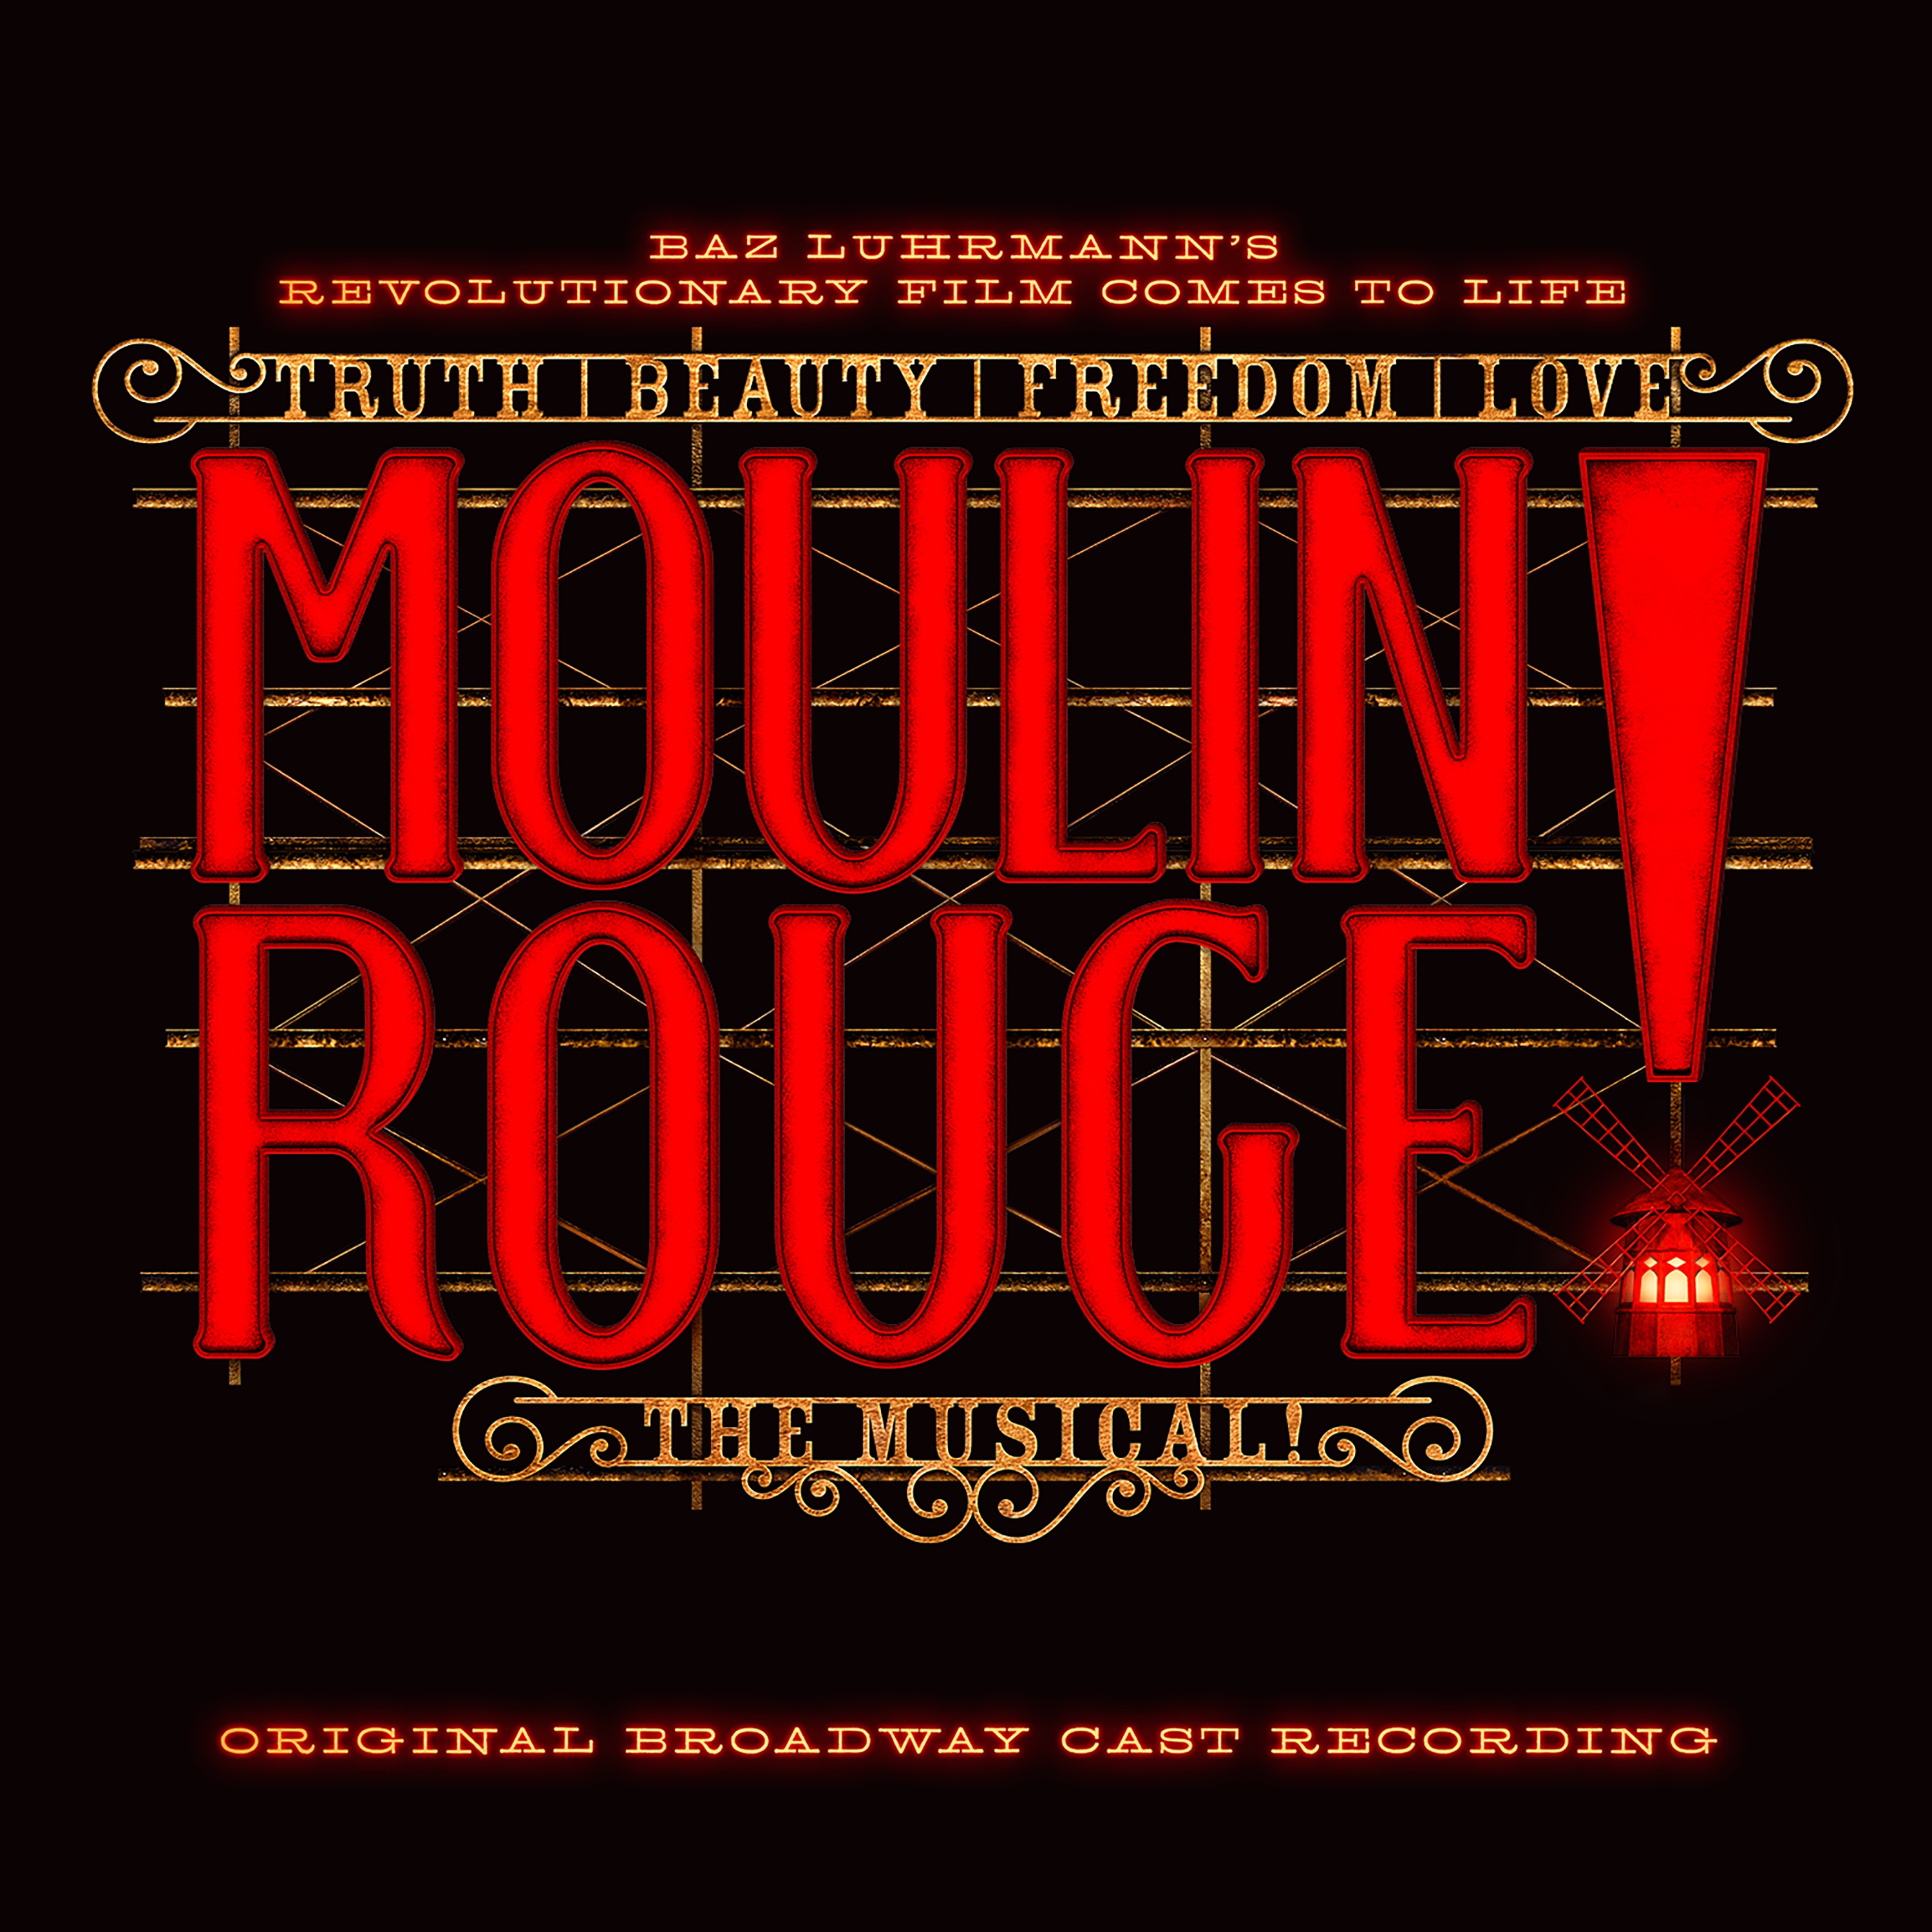 Original broadway. Мулен Руж мюзикл Бродвей. Original Broadway Cast of Moulin rouge! The Musical. Danny Burstein Moulin rouge.